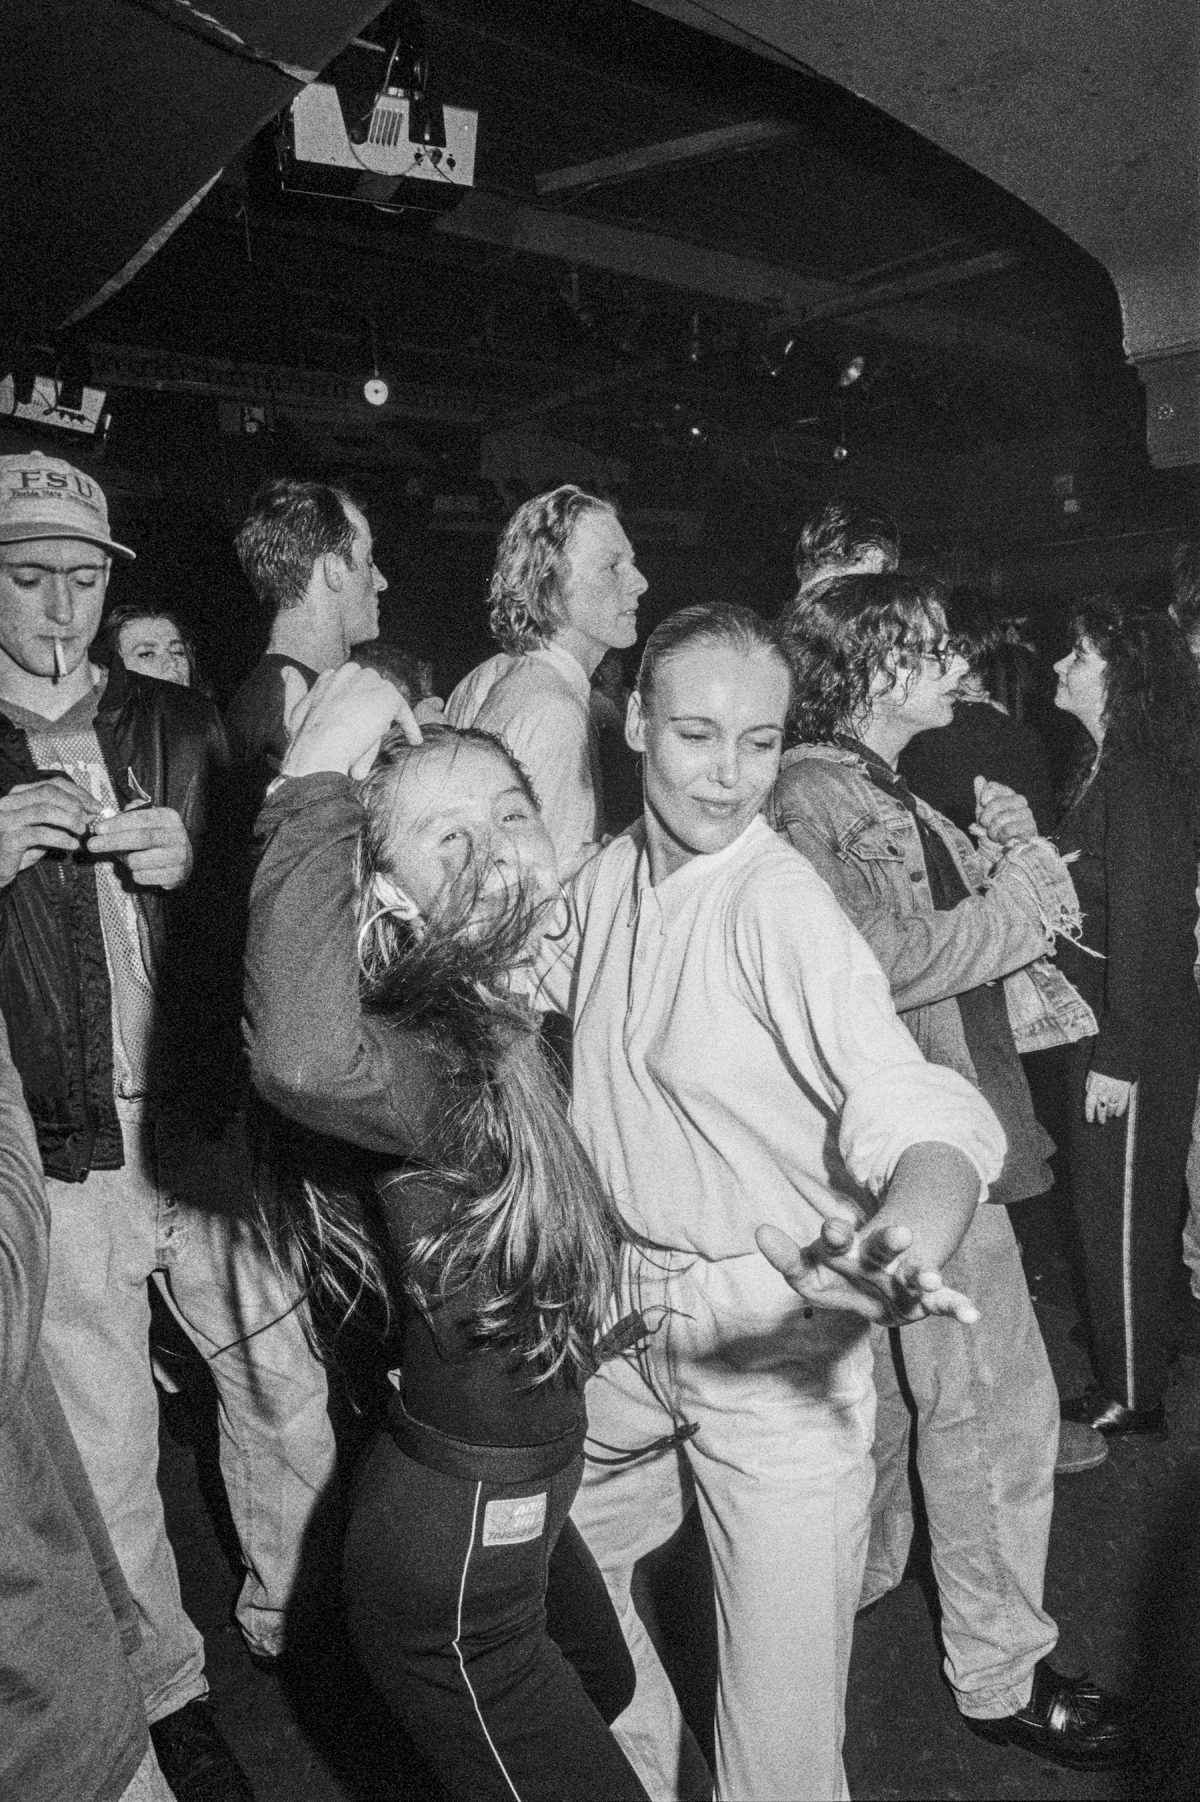 Nick Peacock, clubbing, Sub Club, Atlantis, 1990